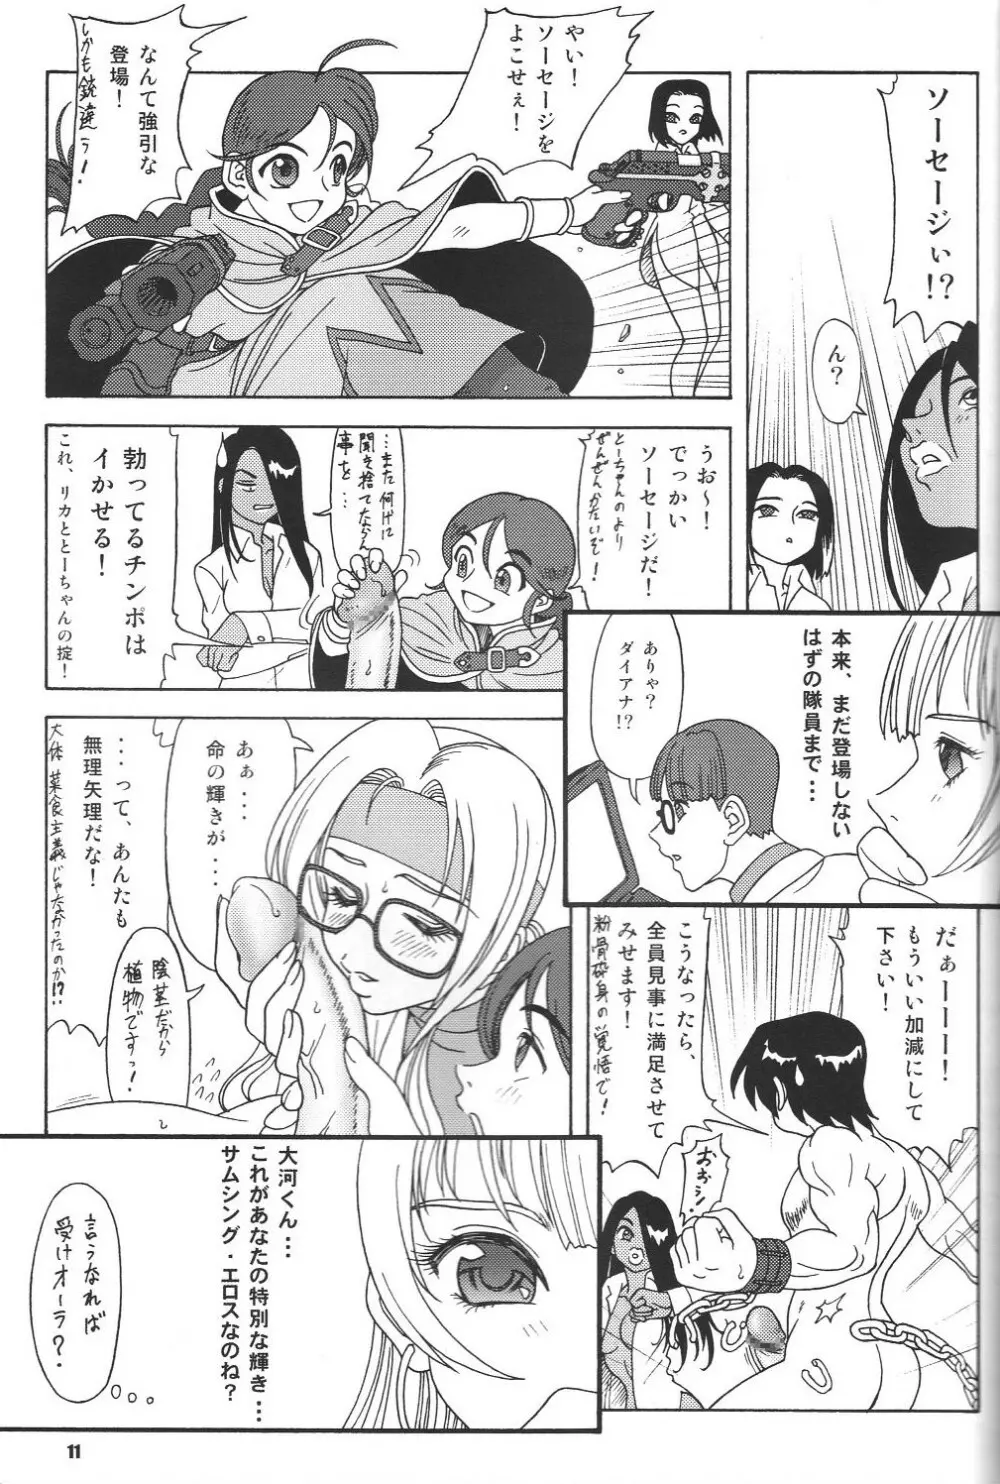 Fujishima Spirits vol.6 - page10